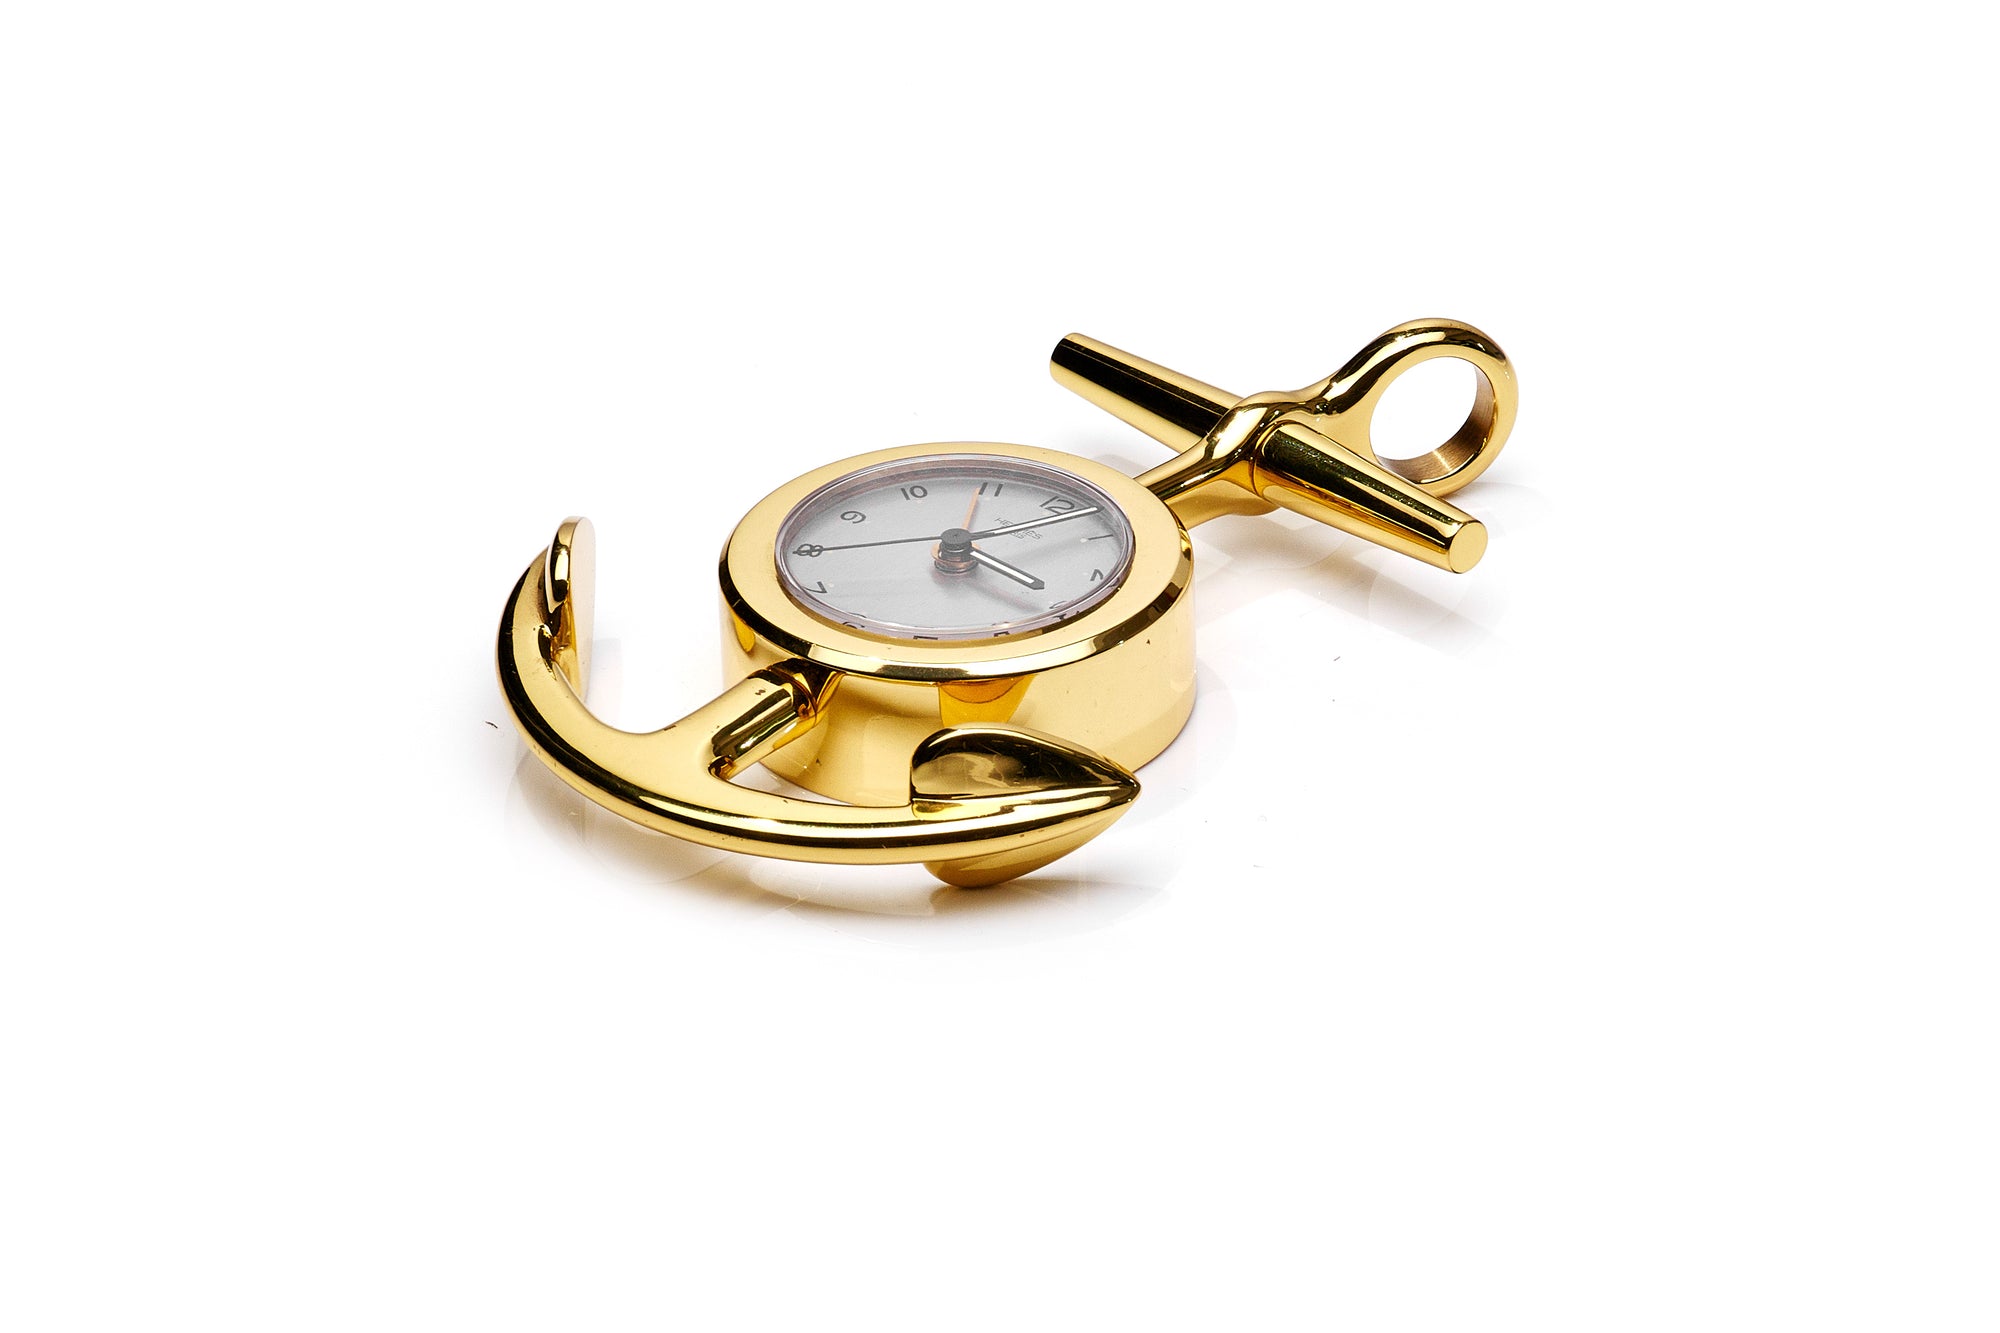 Hermes Anchor Clock